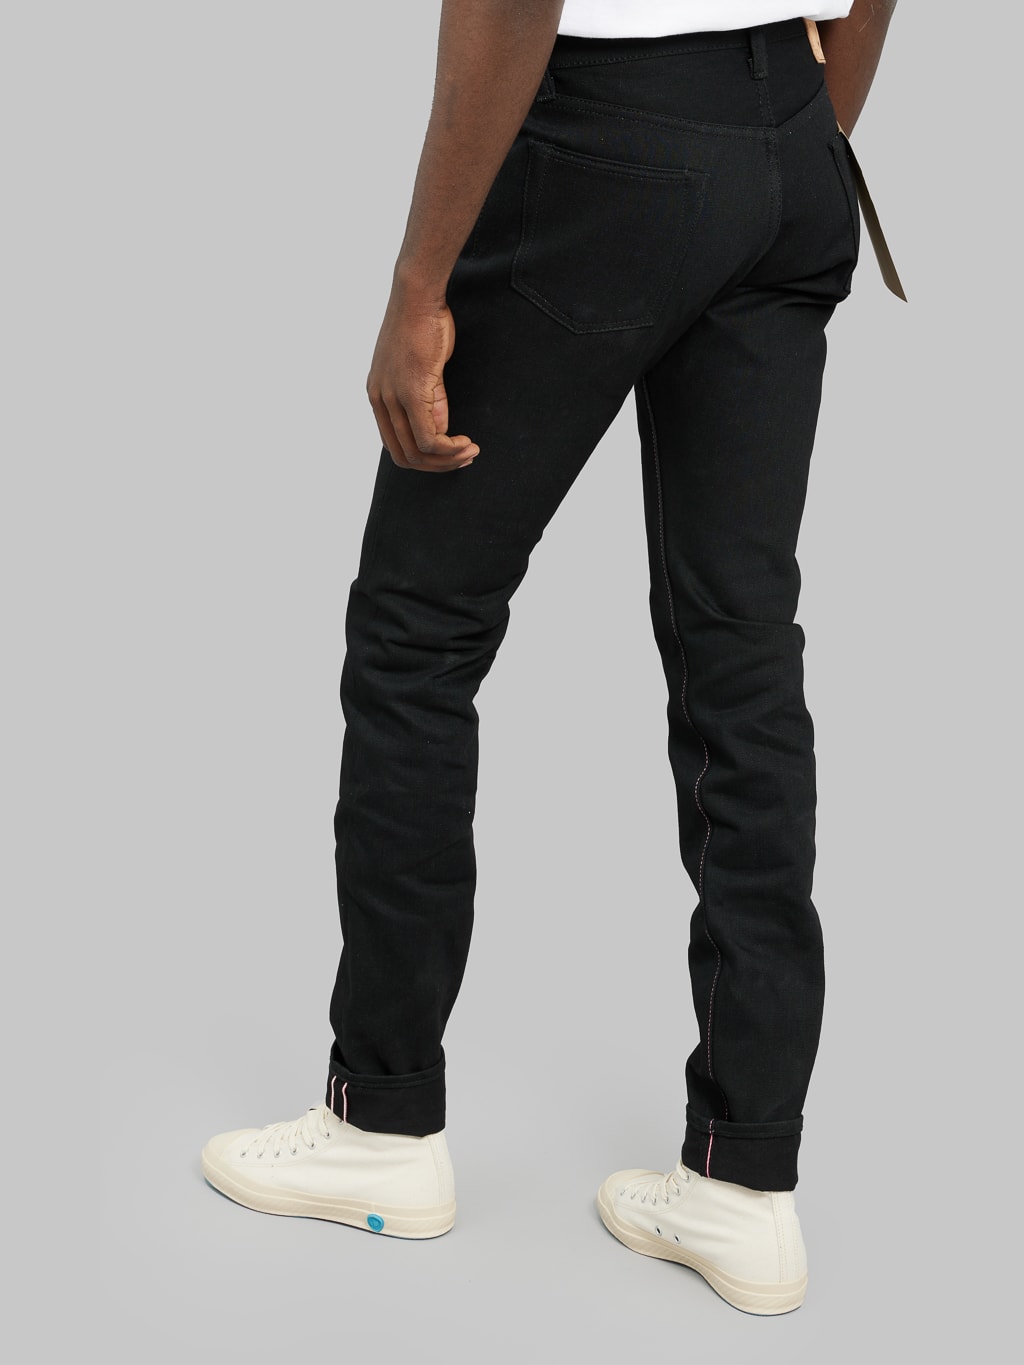 momotaro 0405b selvedge black denim high tapered jeans regular rise